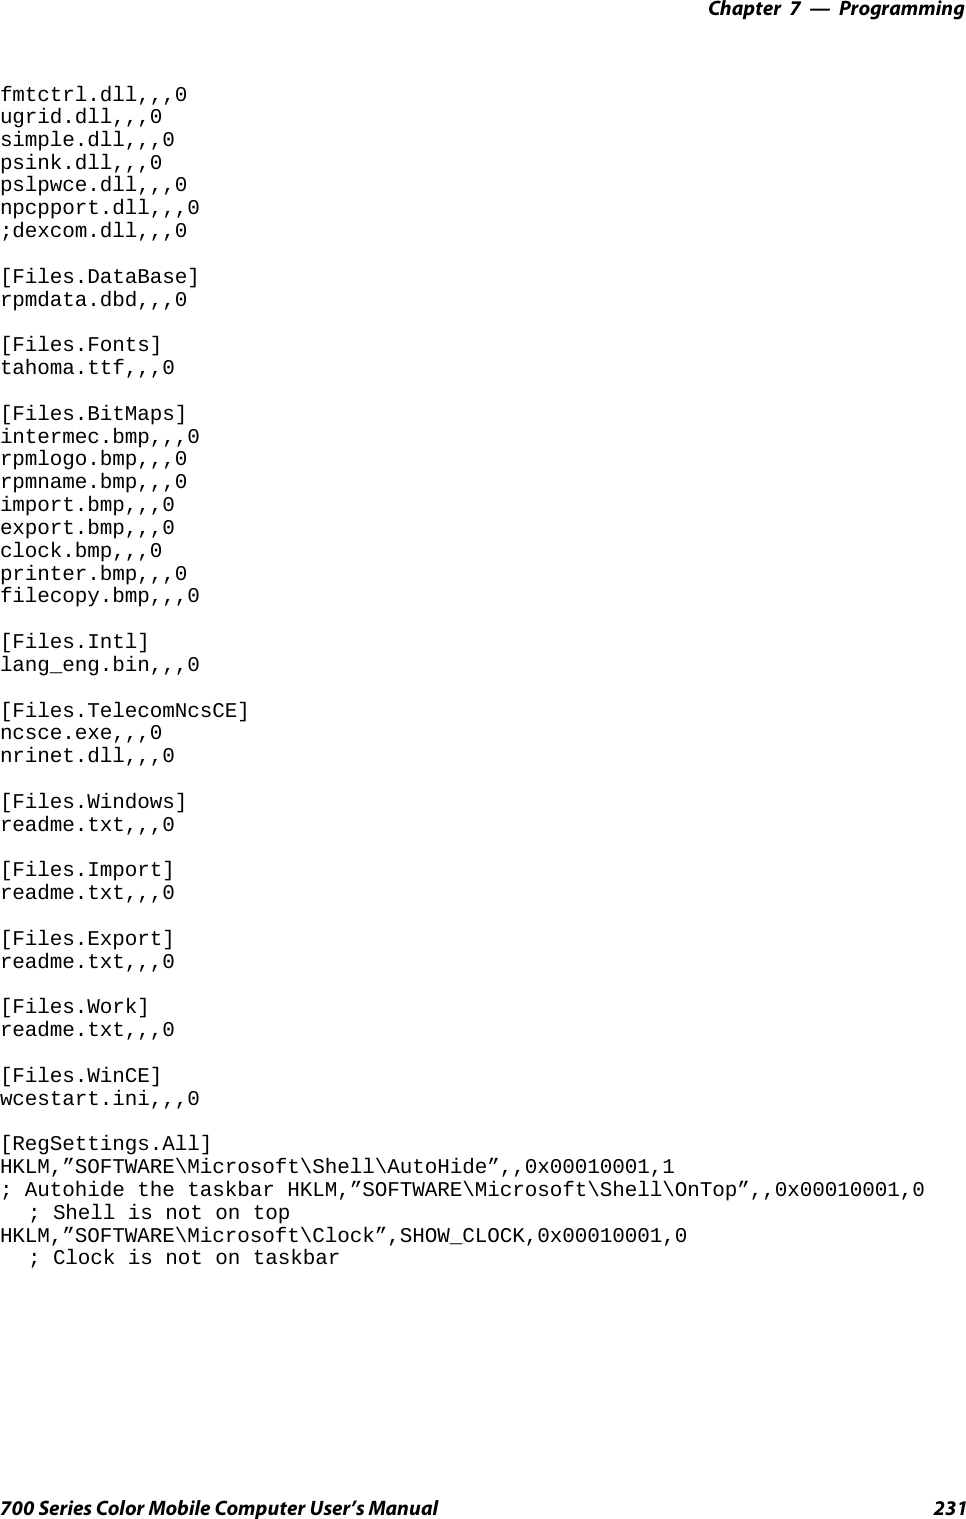 Programming—Chapter 7231700 Series Color Mobile Computer User’s Manualfmtctrl.dll,,,0ugrid.dll,,,0simple.dll,,,0psink.dll,,,0pslpwce.dll,,,0npcpport.dll,,,0;dexcom.dll,,,0[Files.DataBase]rpmdata.dbd,,,0[Files.Fonts]tahoma.ttf,,,0[Files.BitMaps]intermec.bmp,,,0rpmlogo.bmp,,,0rpmname.bmp,,,0import.bmp,,,0export.bmp,,,0clock.bmp,,,0printer.bmp,,,0filecopy.bmp,,,0[Files.Intl]lang_eng.bin,,,0[Files.TelecomNcsCE]ncsce.exe,,,0nrinet.dll,,,0[Files.Windows]readme.txt,,,0[Files.Import]readme.txt,,,0[Files.Export]readme.txt,,,0[Files.Work]readme.txt,,,0[Files.WinCE]wcestart.ini,,,0[RegSettings.All]HKLM,”SOFTWARE\Microsoft\Shell\AutoHide”,,0x00010001,1; Autohide the taskbar HKLM,”SOFTWARE\Microsoft\Shell\OnTop”,,0x00010001,0; Shell is not on topHKLM,”SOFTWARE\Microsoft\Clock”,SHOW_CLOCK,0x00010001,0; Clock is not on taskbar